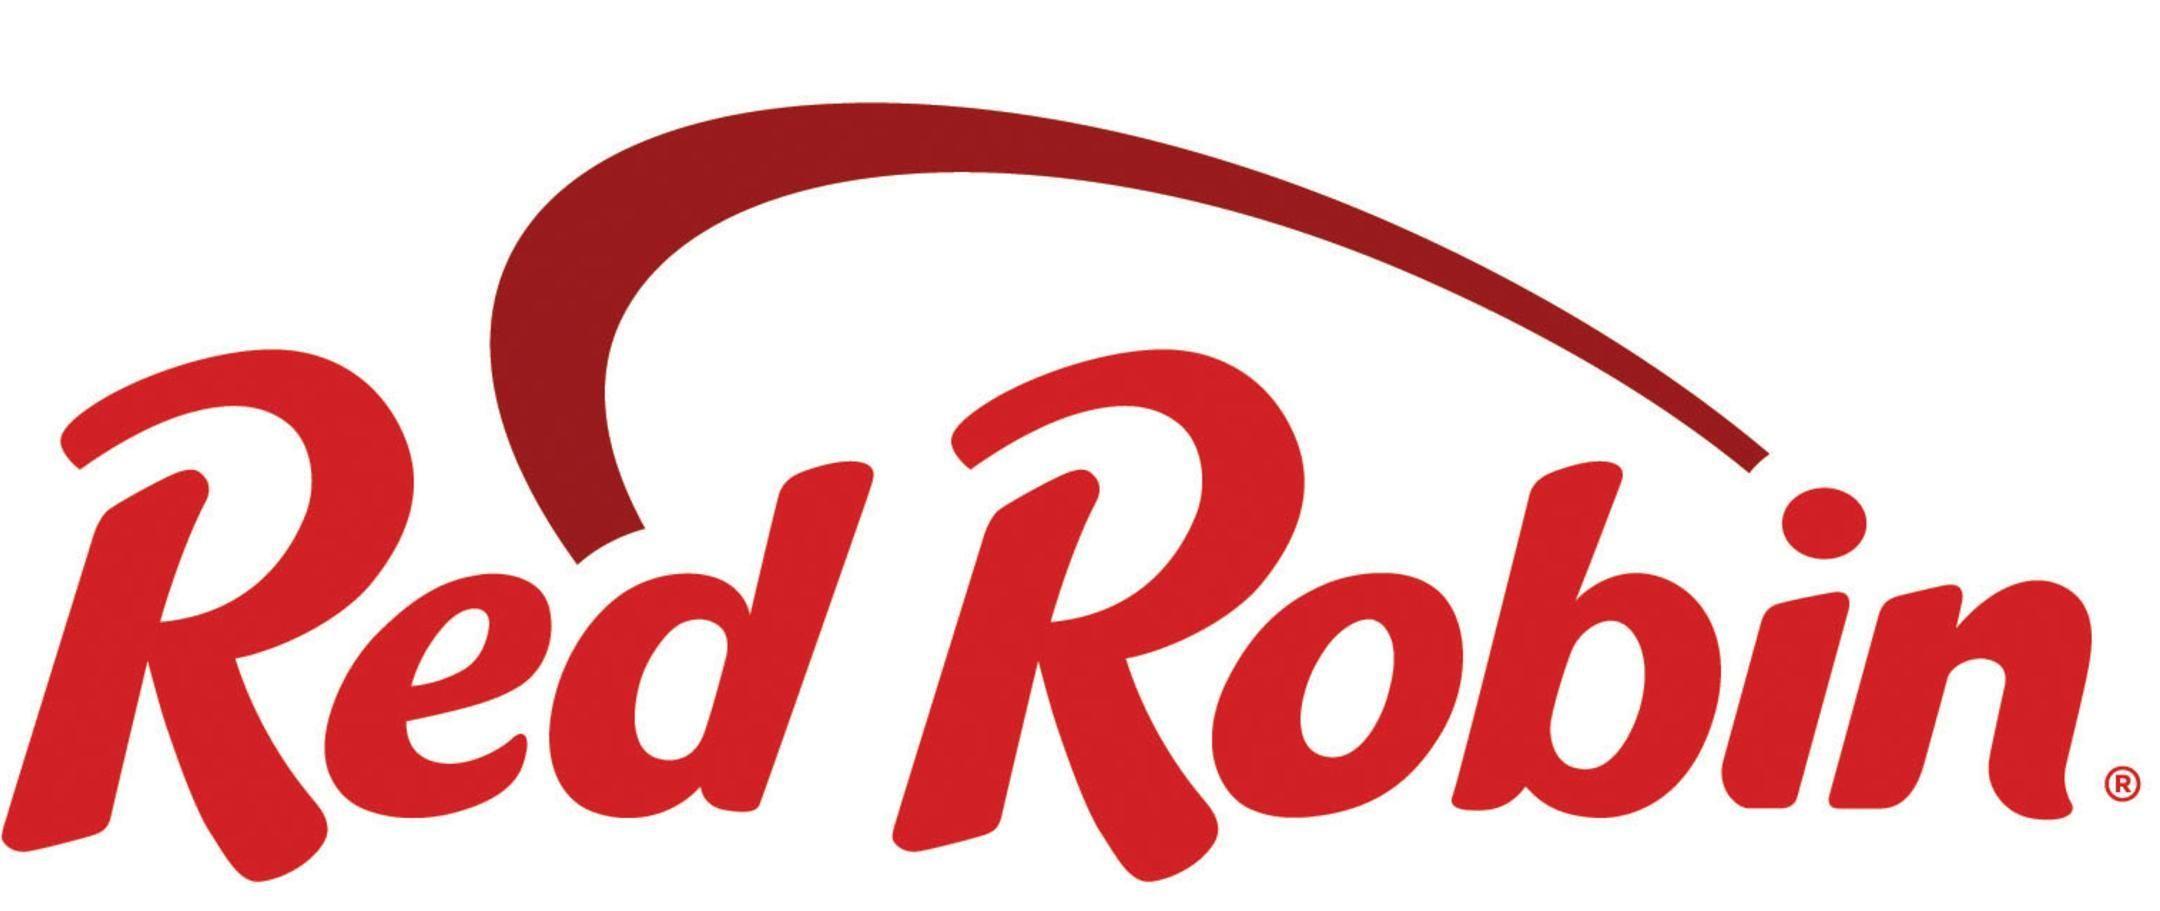 Hopdoddy Logo - Hopdoddy Burger Bar Competitors, Revenue and Employees